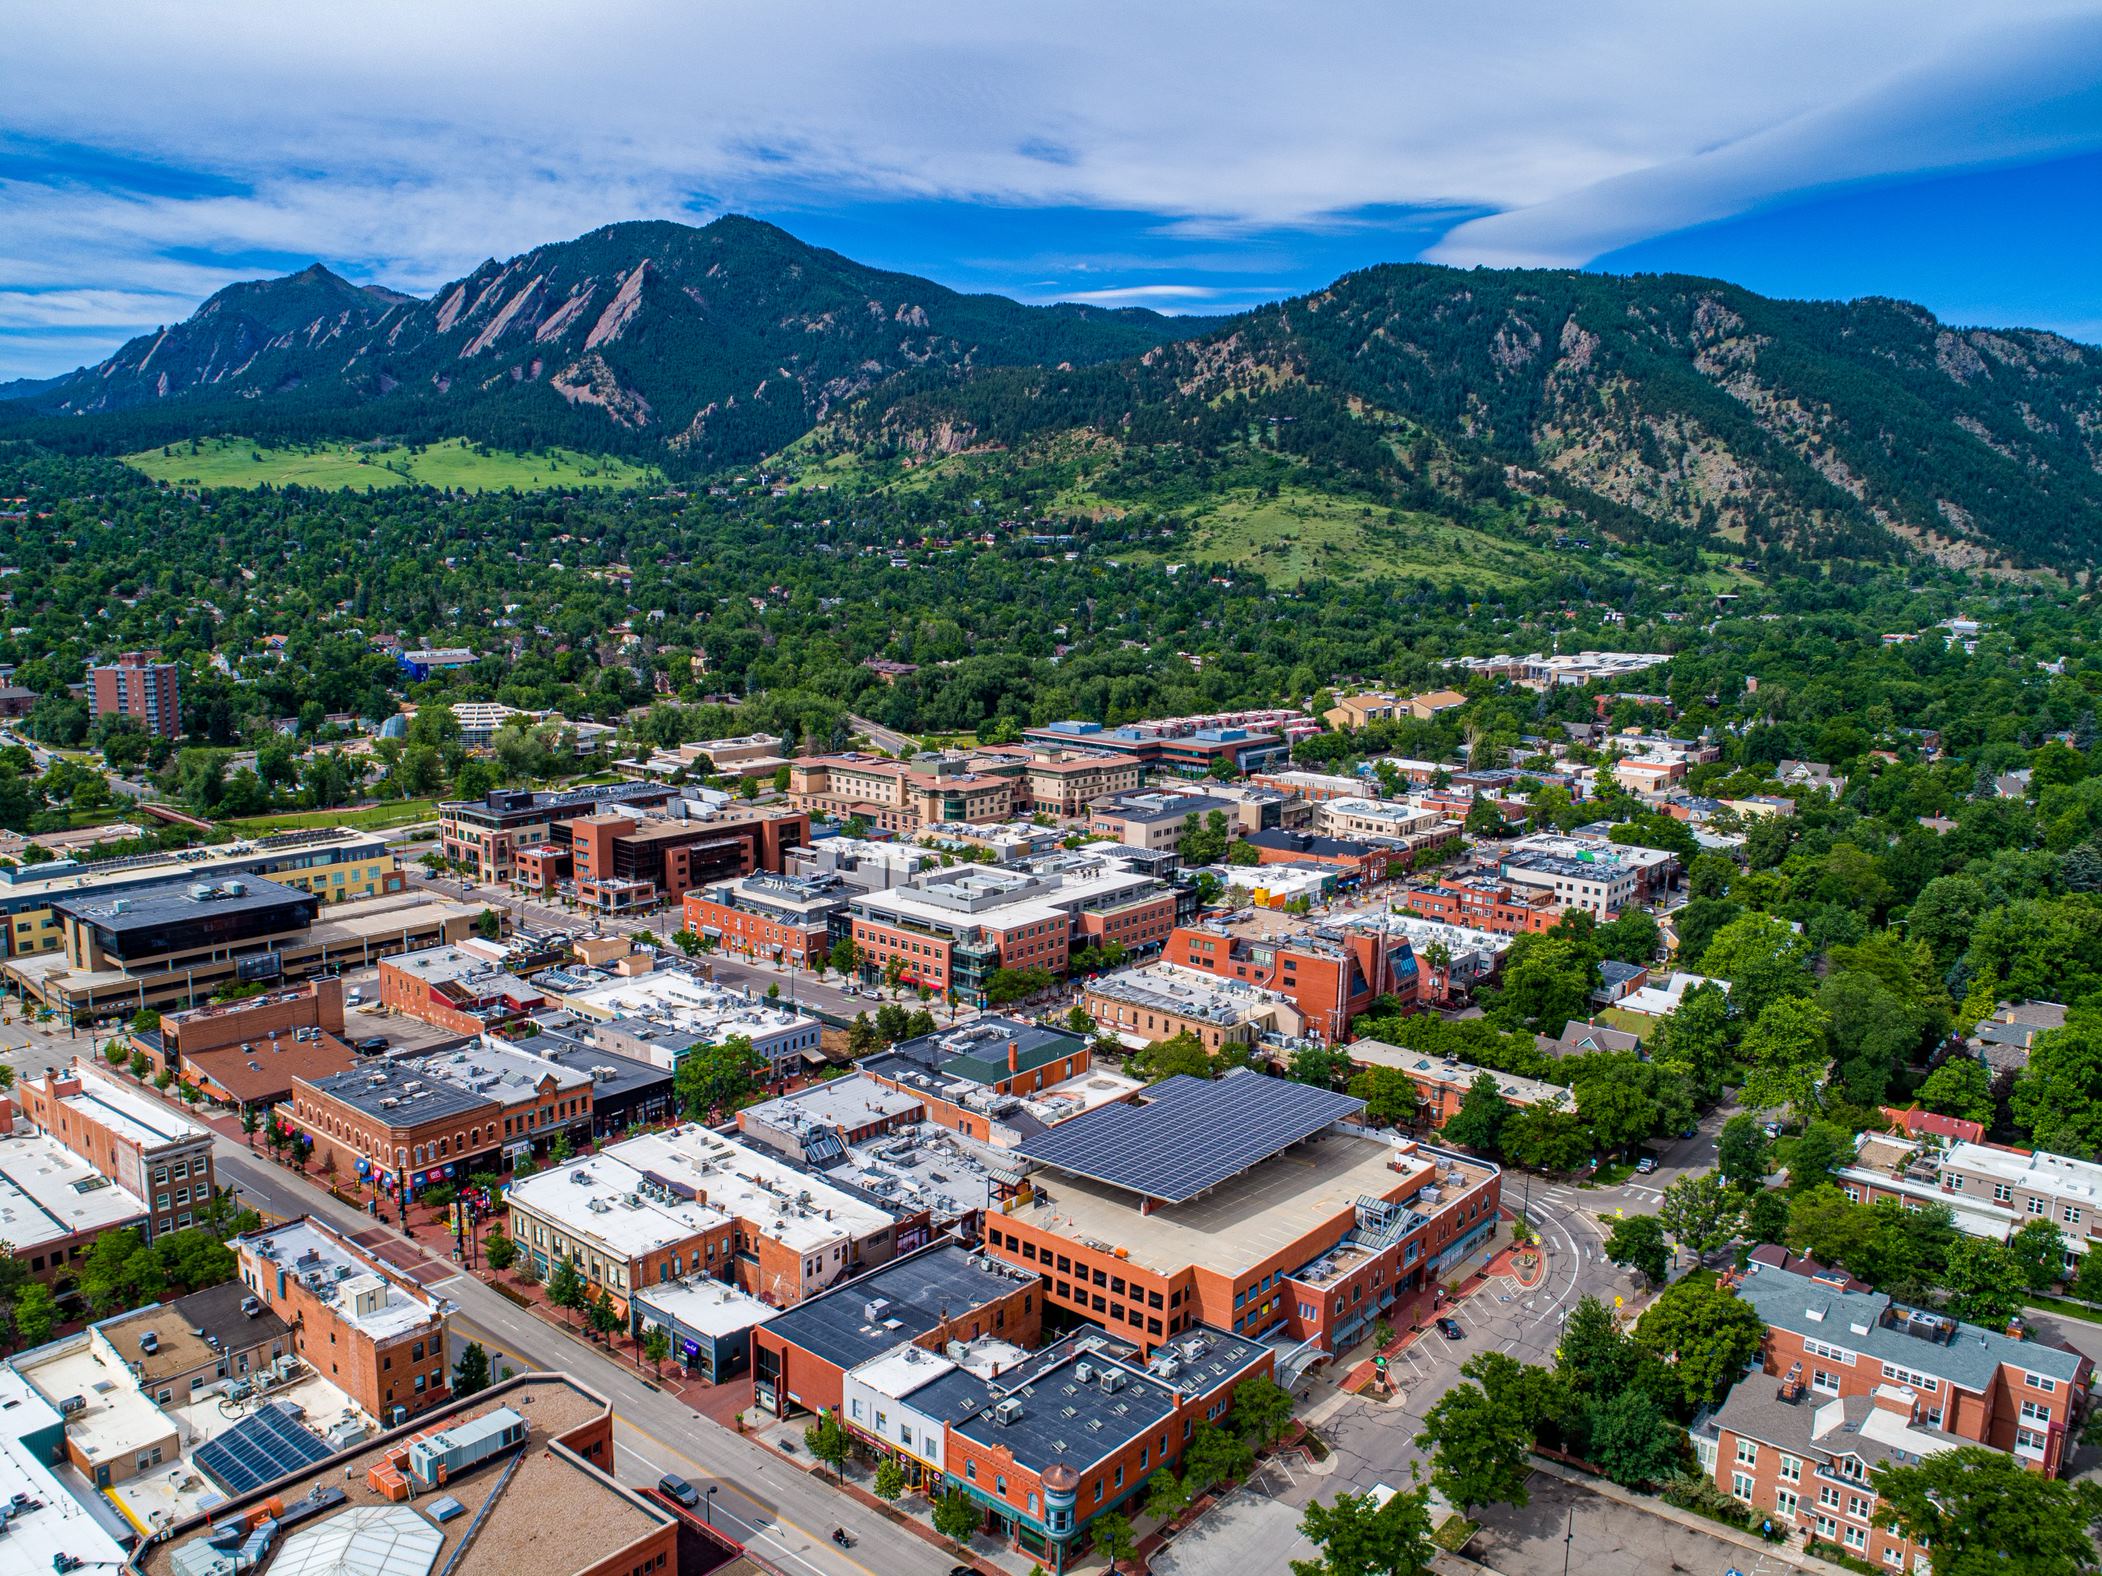 Droneflatironscityscape.jpg City of Boulder